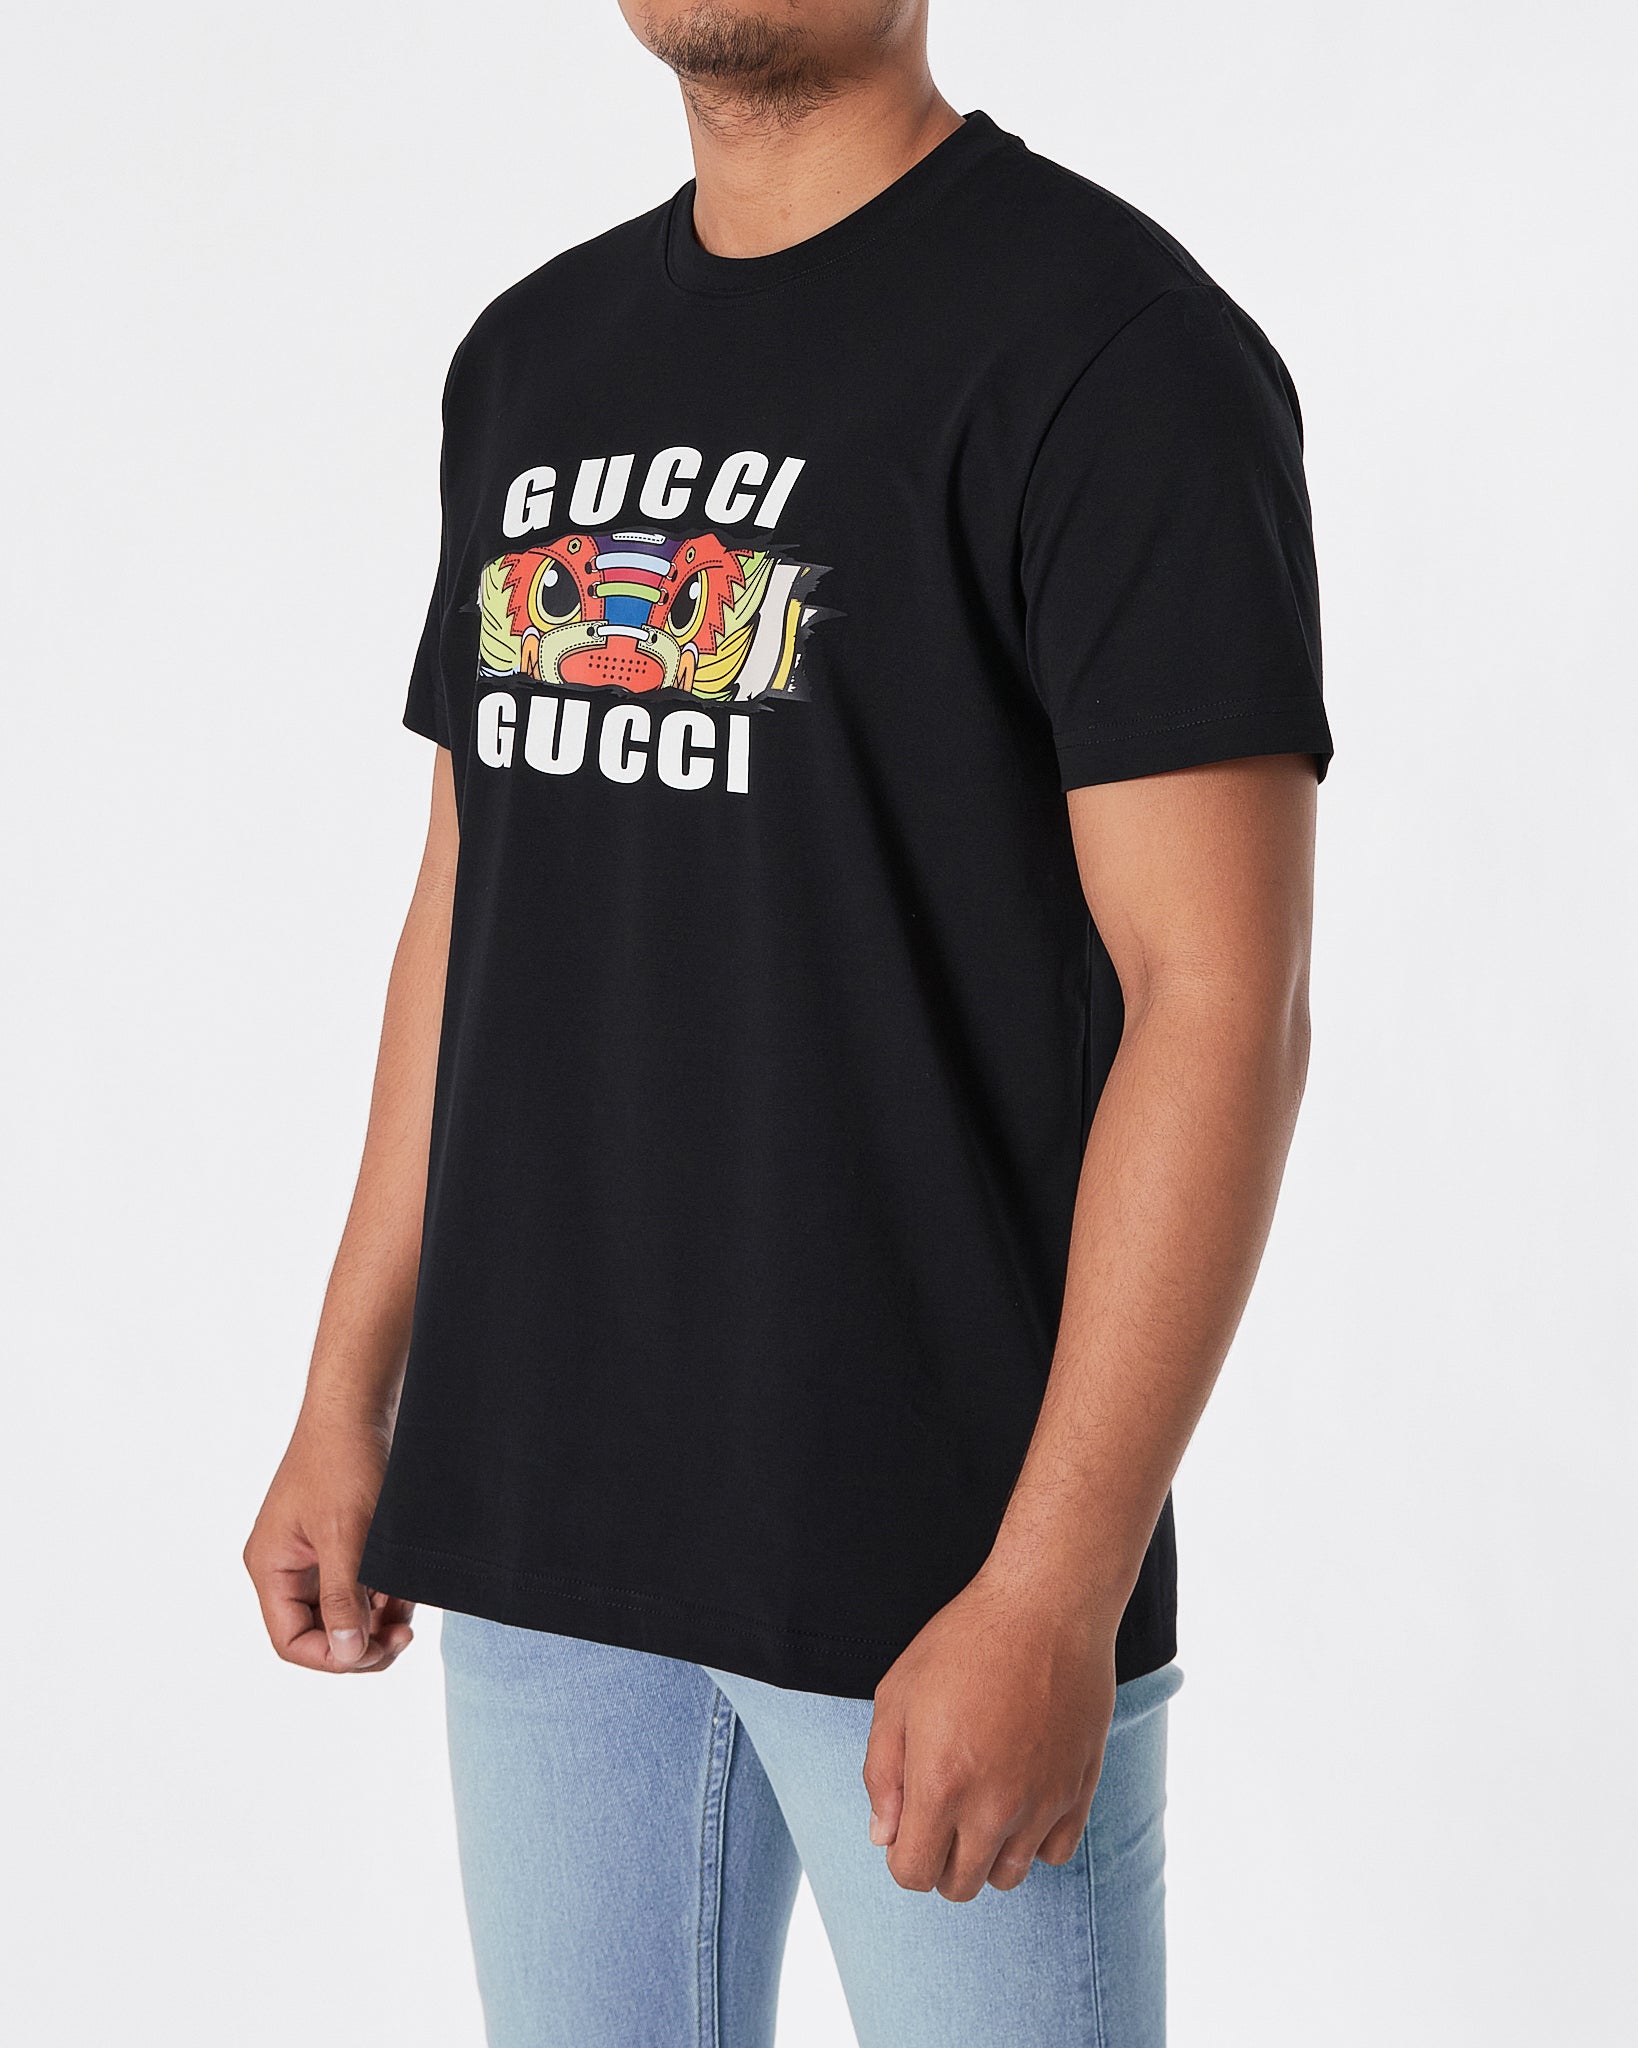 GUC Dragon Printed Men Black T-Shirt 16.90